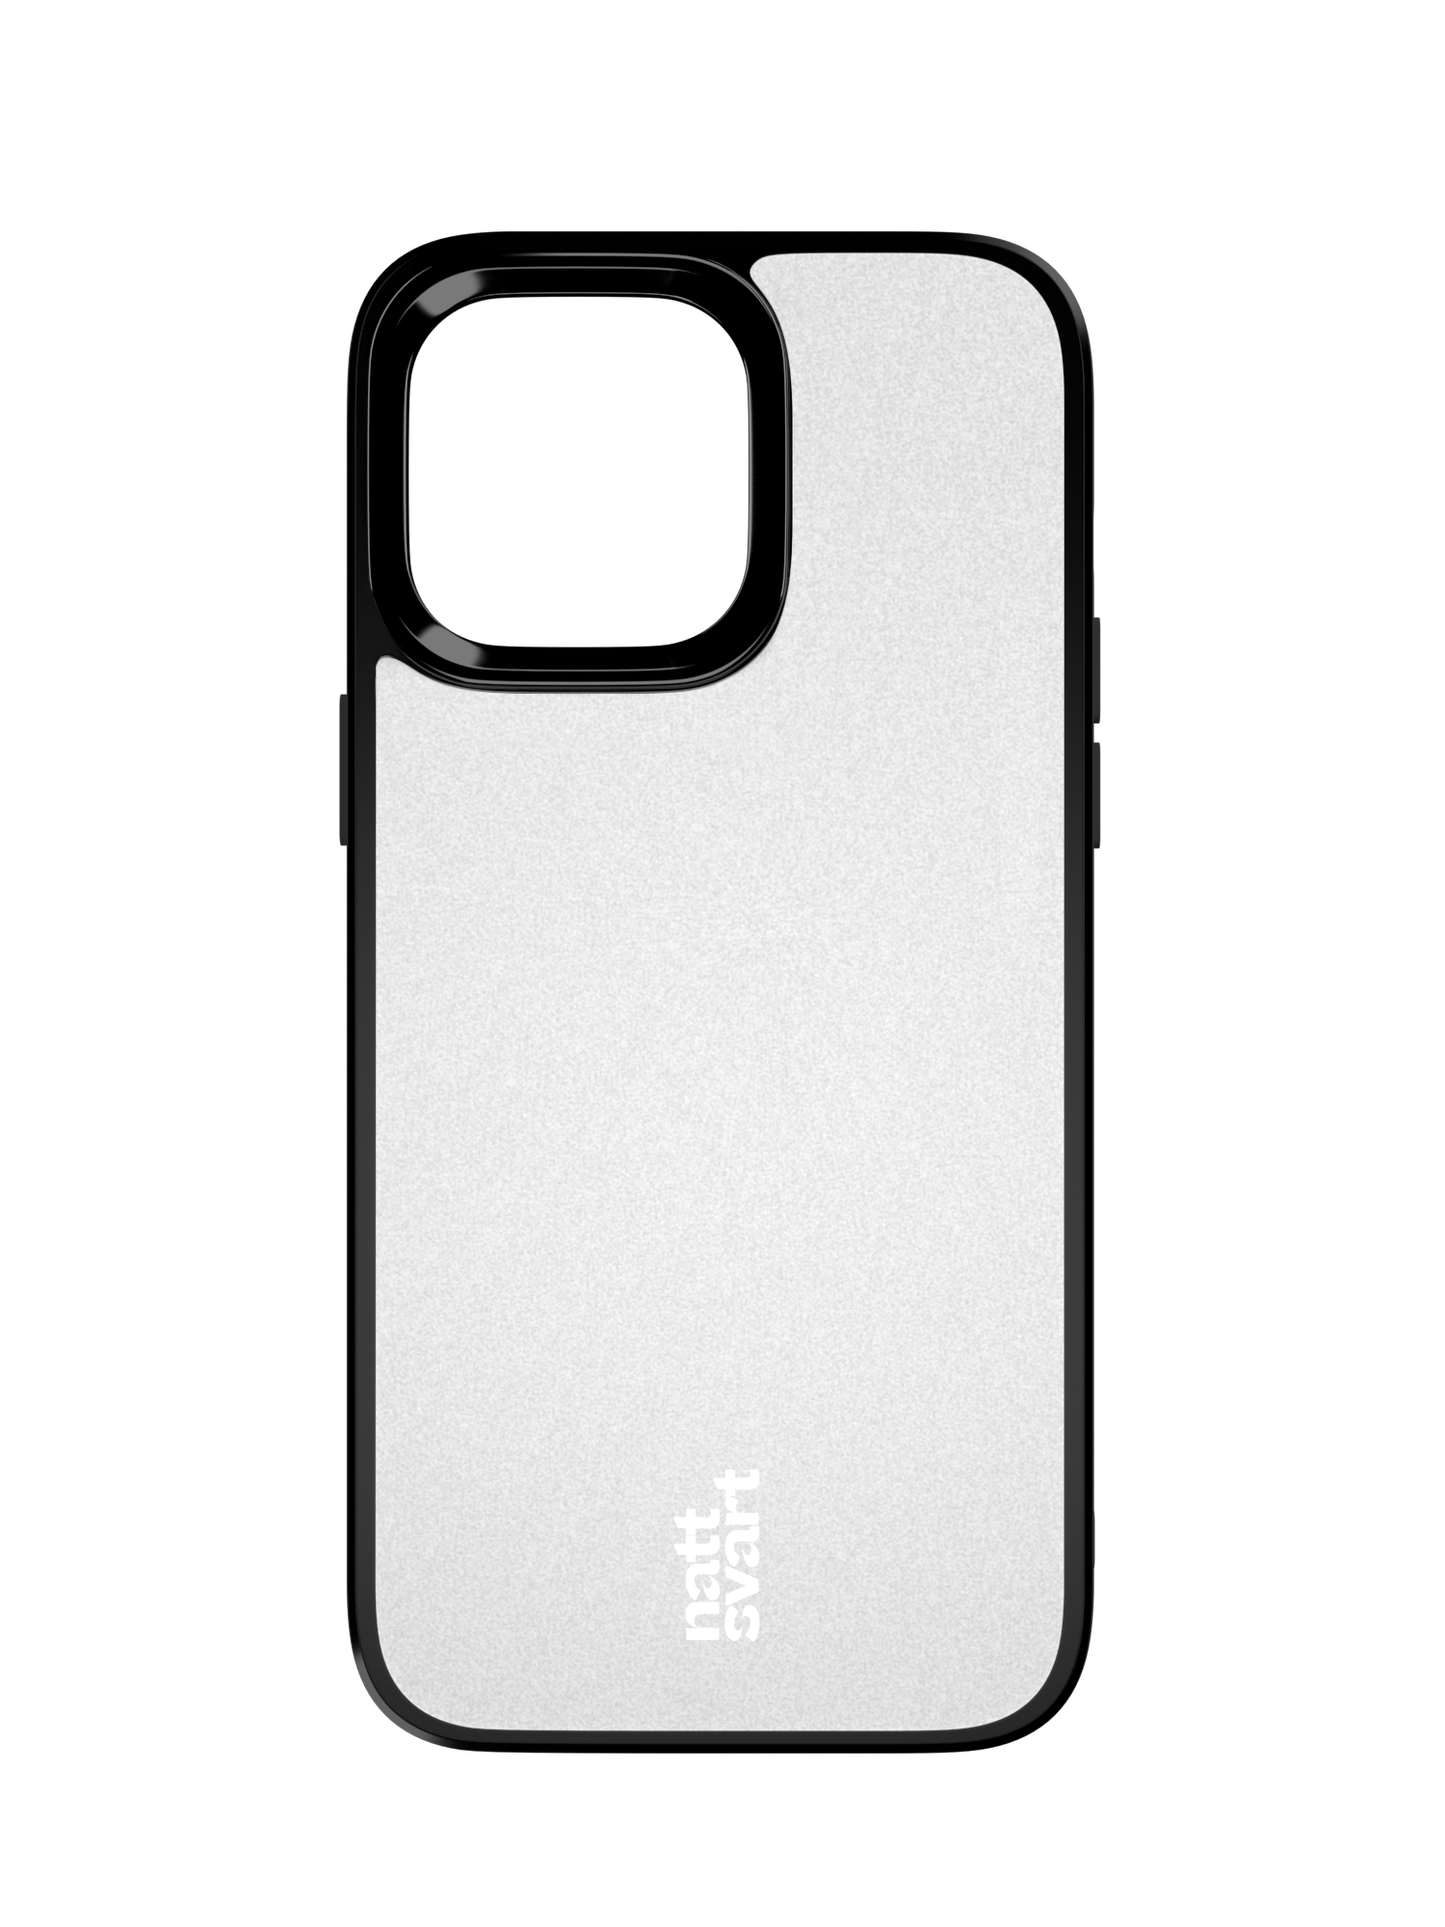 Super reflective iPhone case